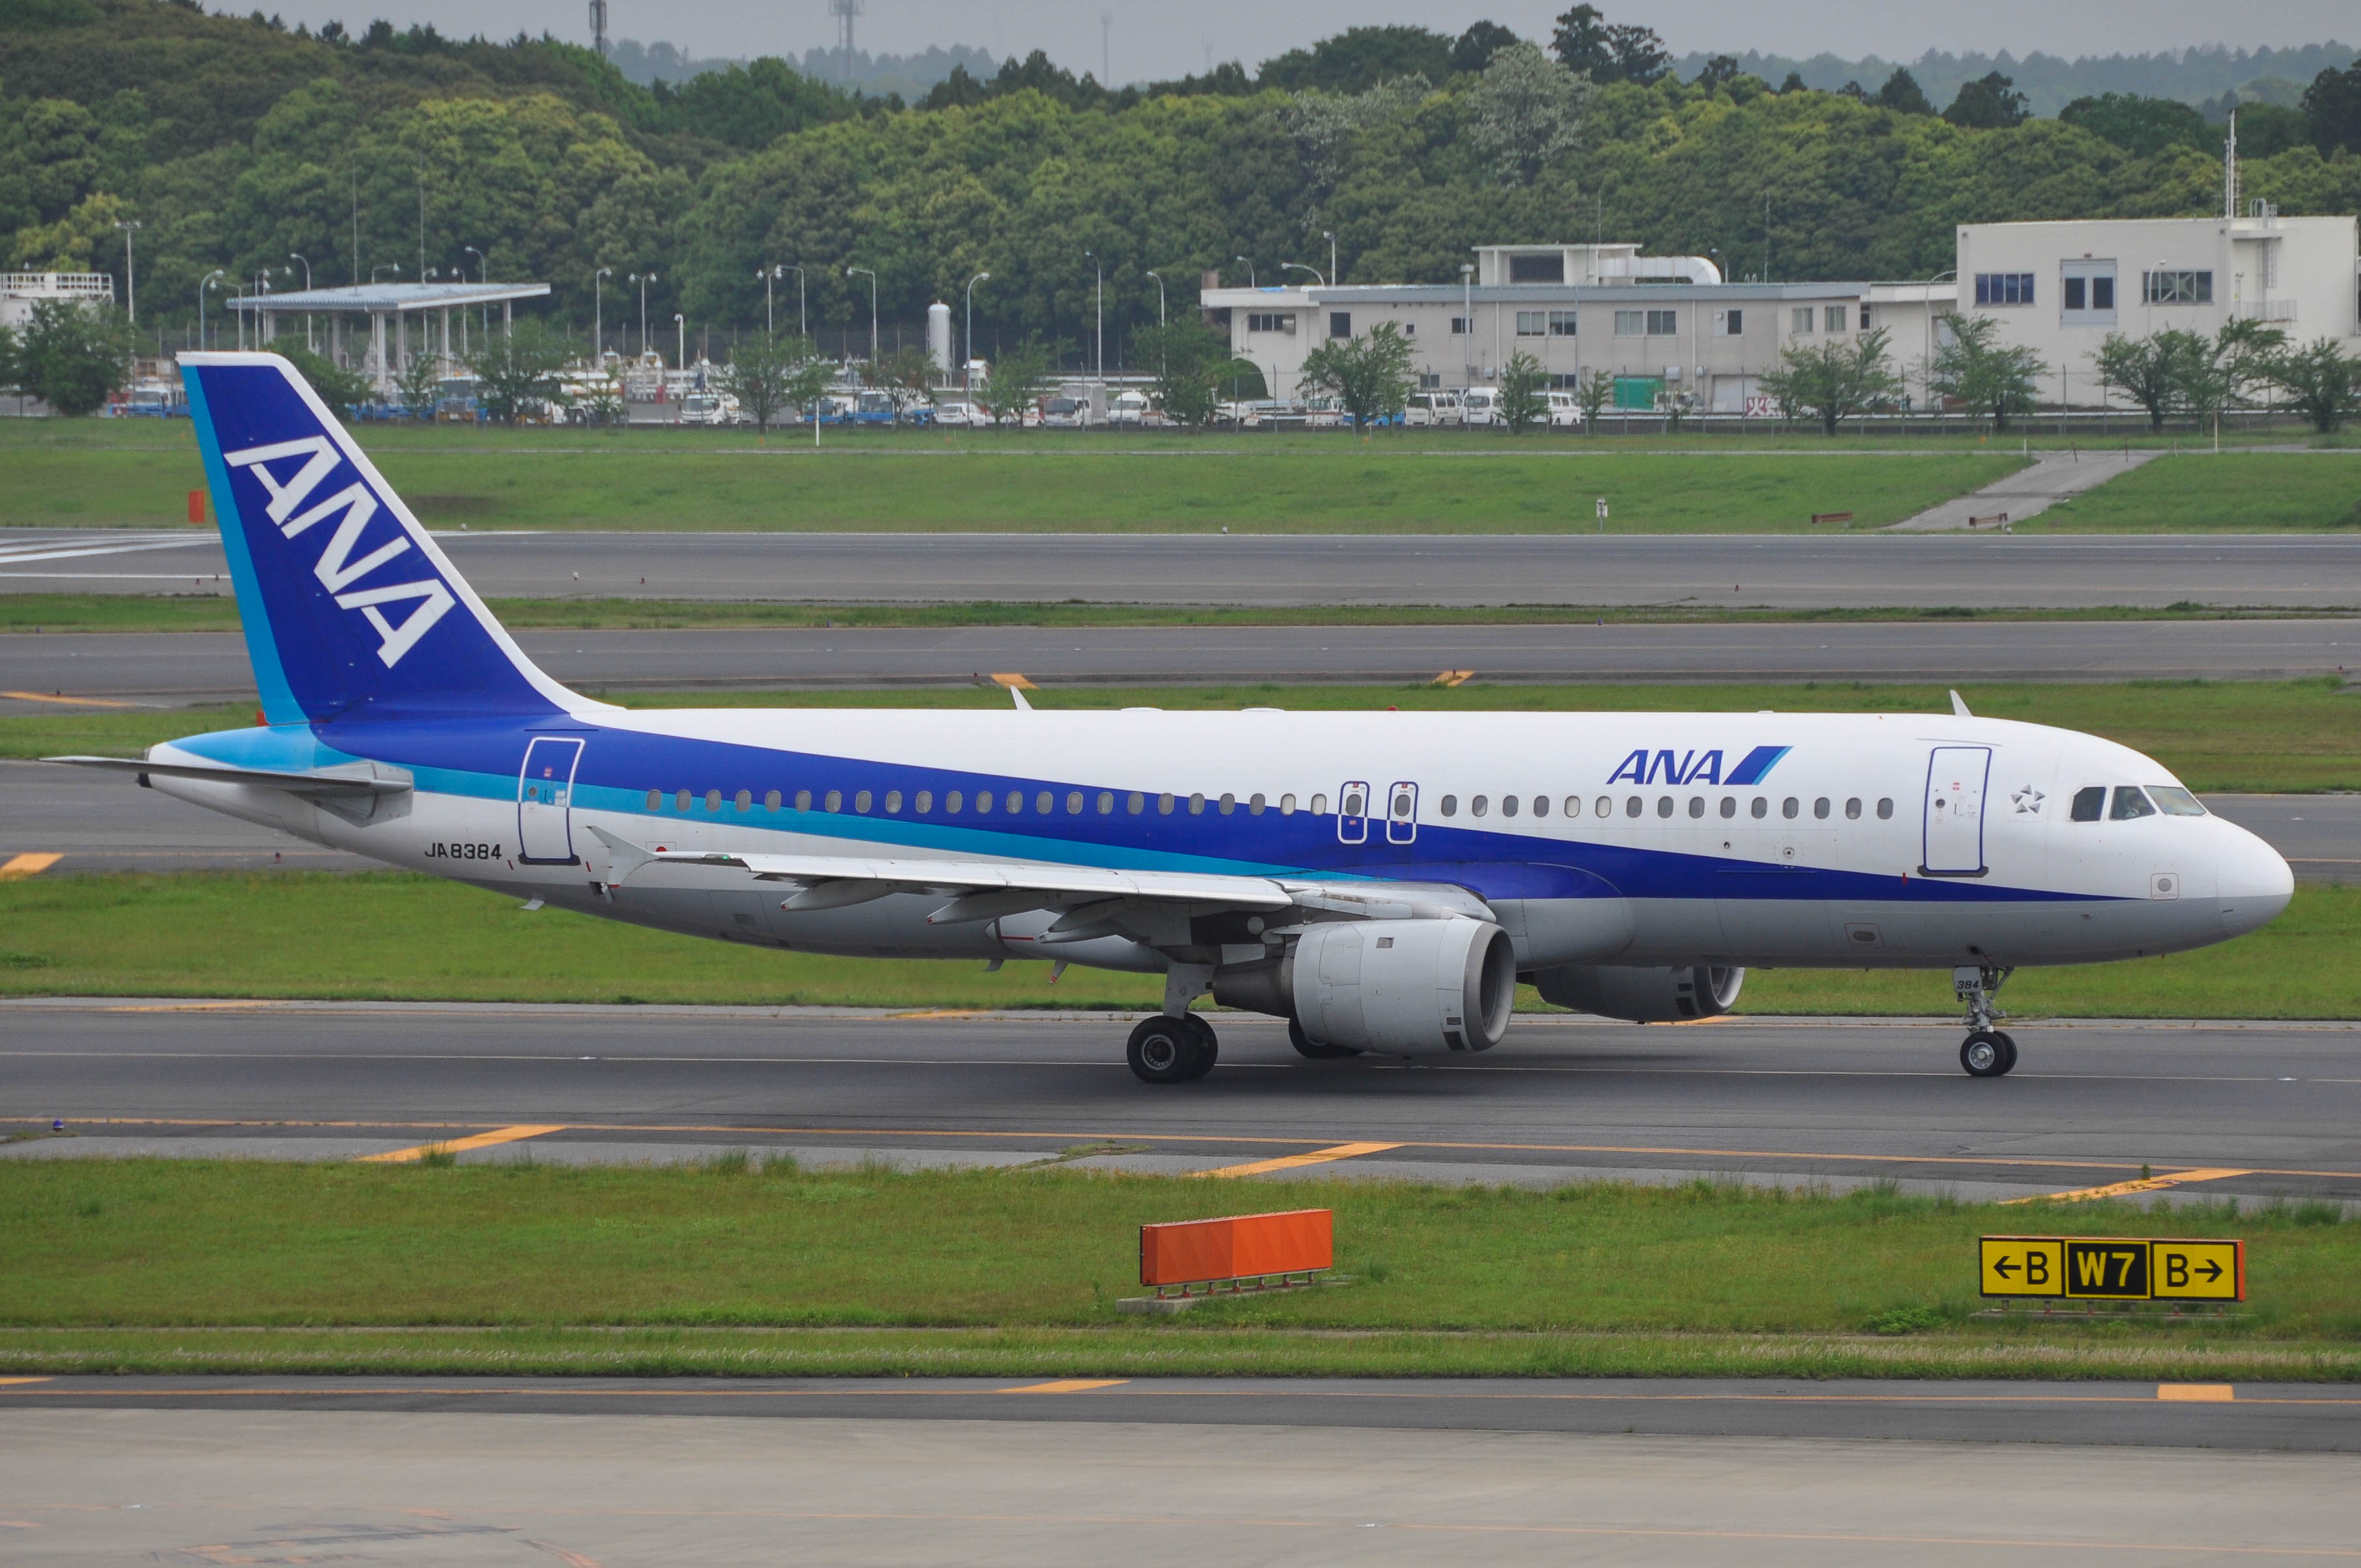 JA8384 /JA8384  ANA - All Nippon Airways Airbus A320 Airframe Information - AVSpotters.com